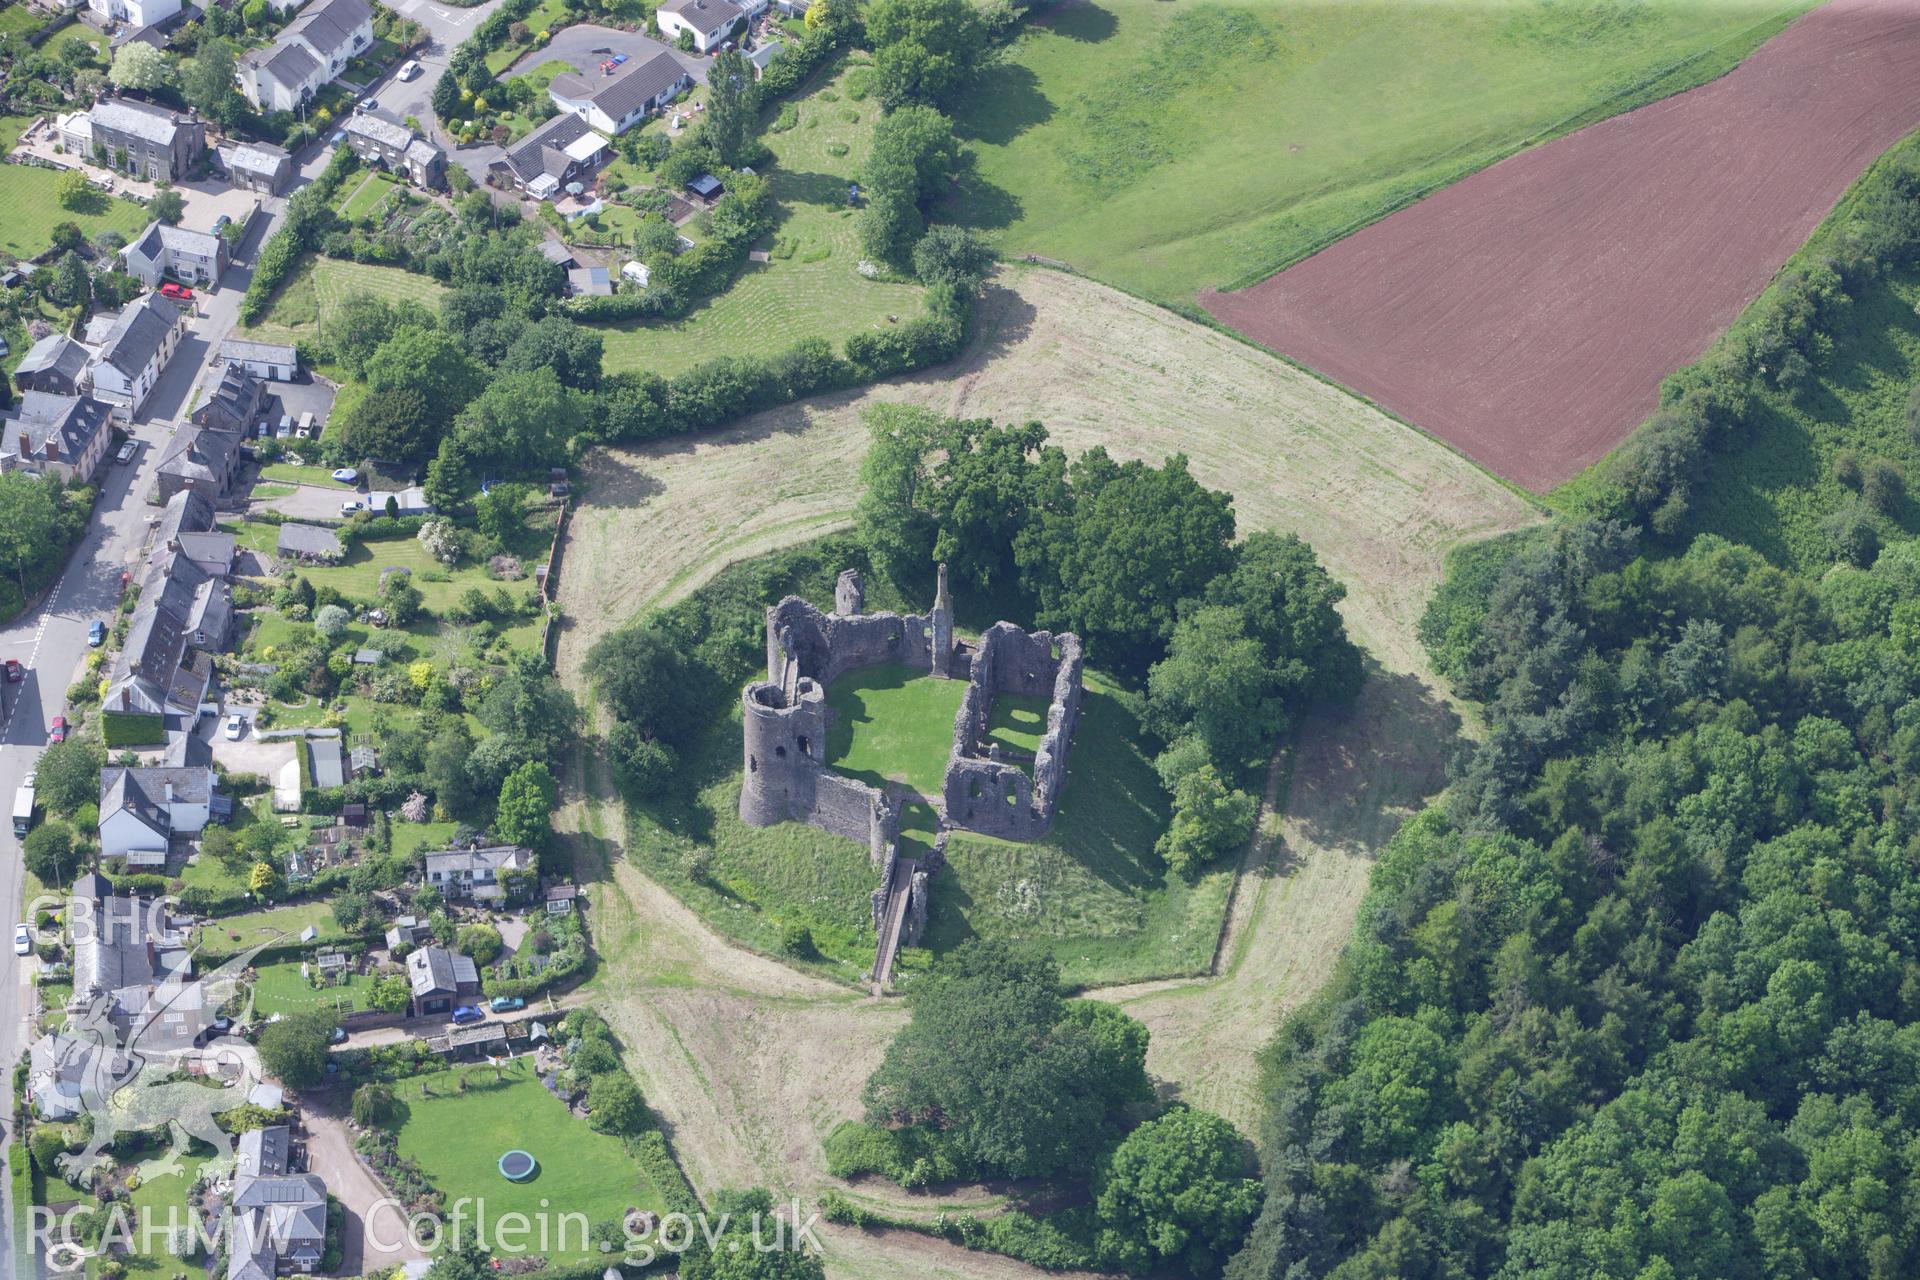 RCAHMW colour oblique aerial photograph of Grosmont Castle. Taken on 11 June 2009 by Toby Driver